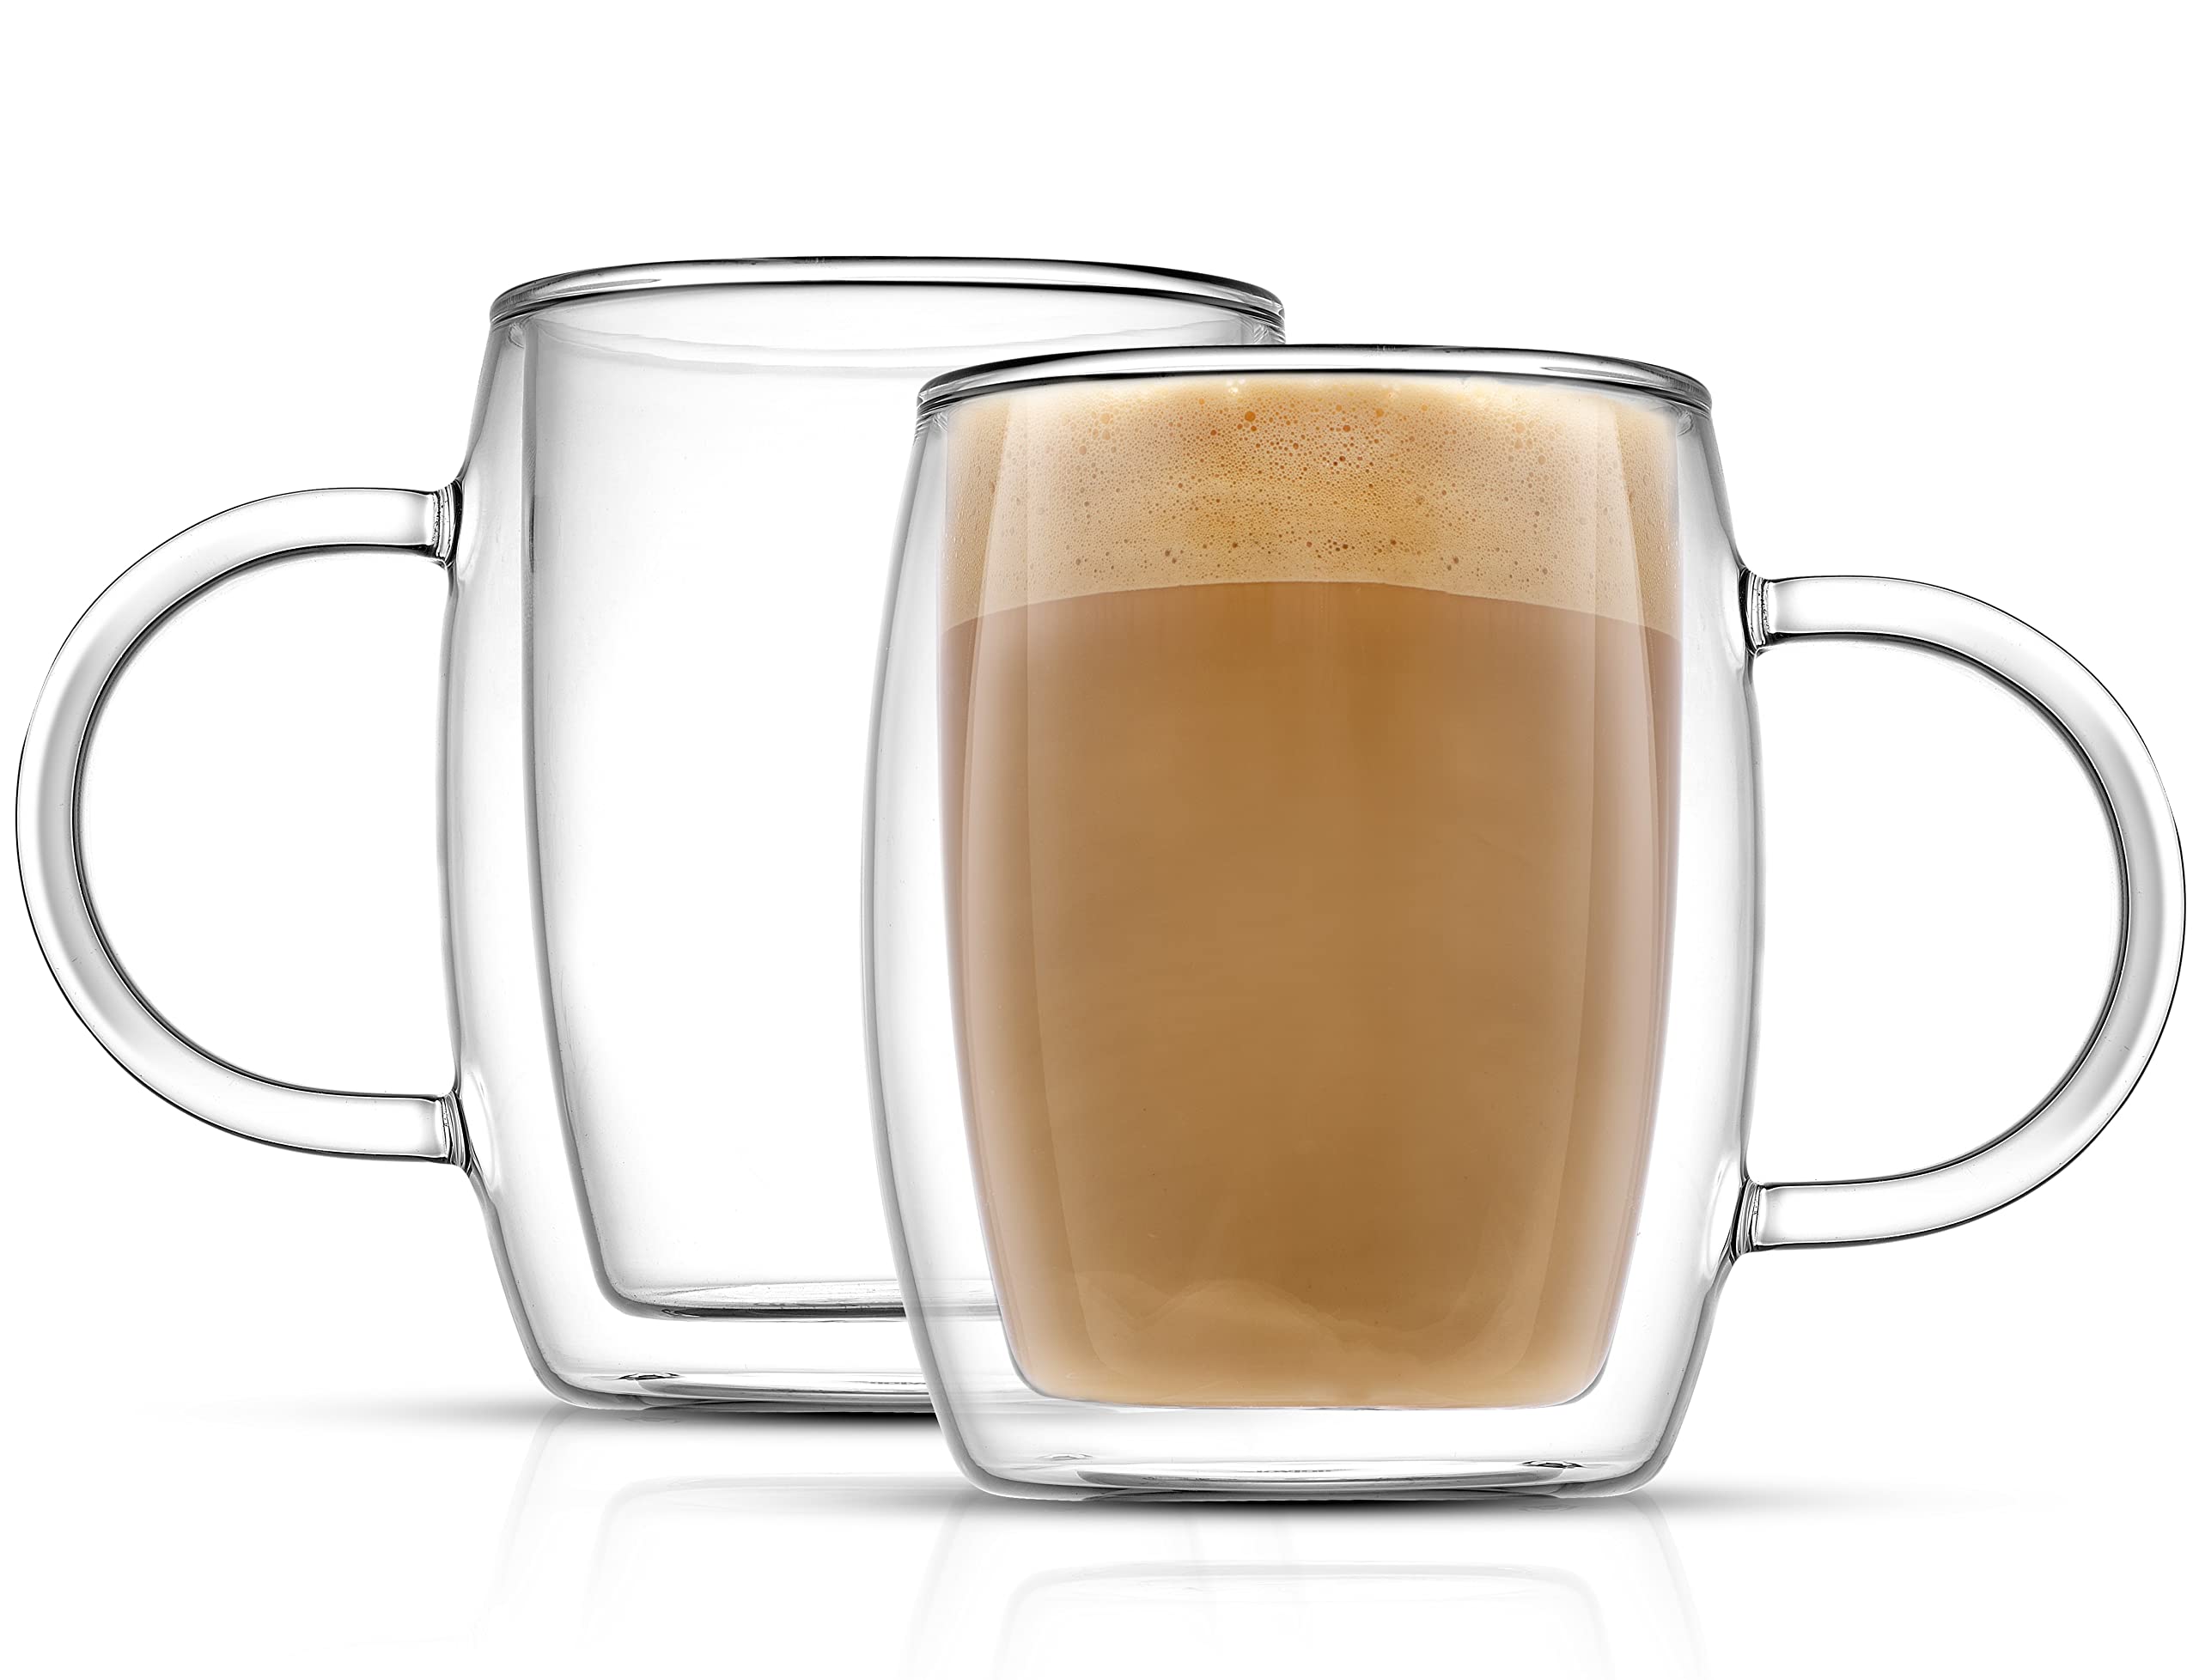 2-Pack 13.5oz JoyJolt Double Wall Glass Coffee Mugs $13.95 @ Amazon w/ Prime shipping